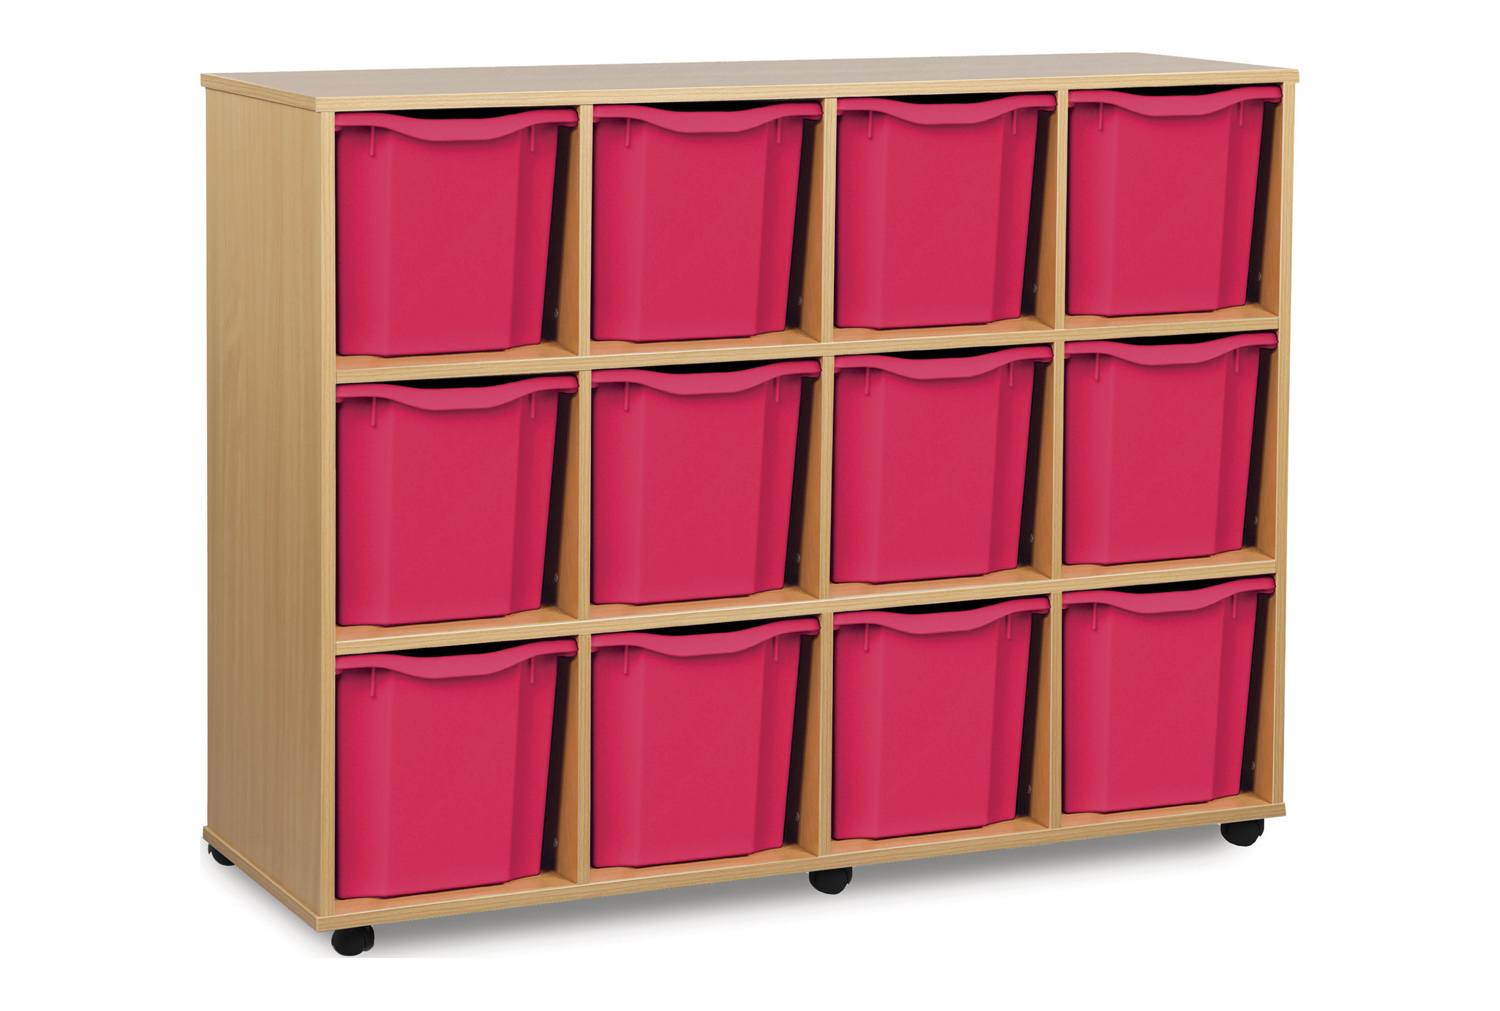 12 Jumbo Classroom Tray Storage Unit, Pink Classroom Trays